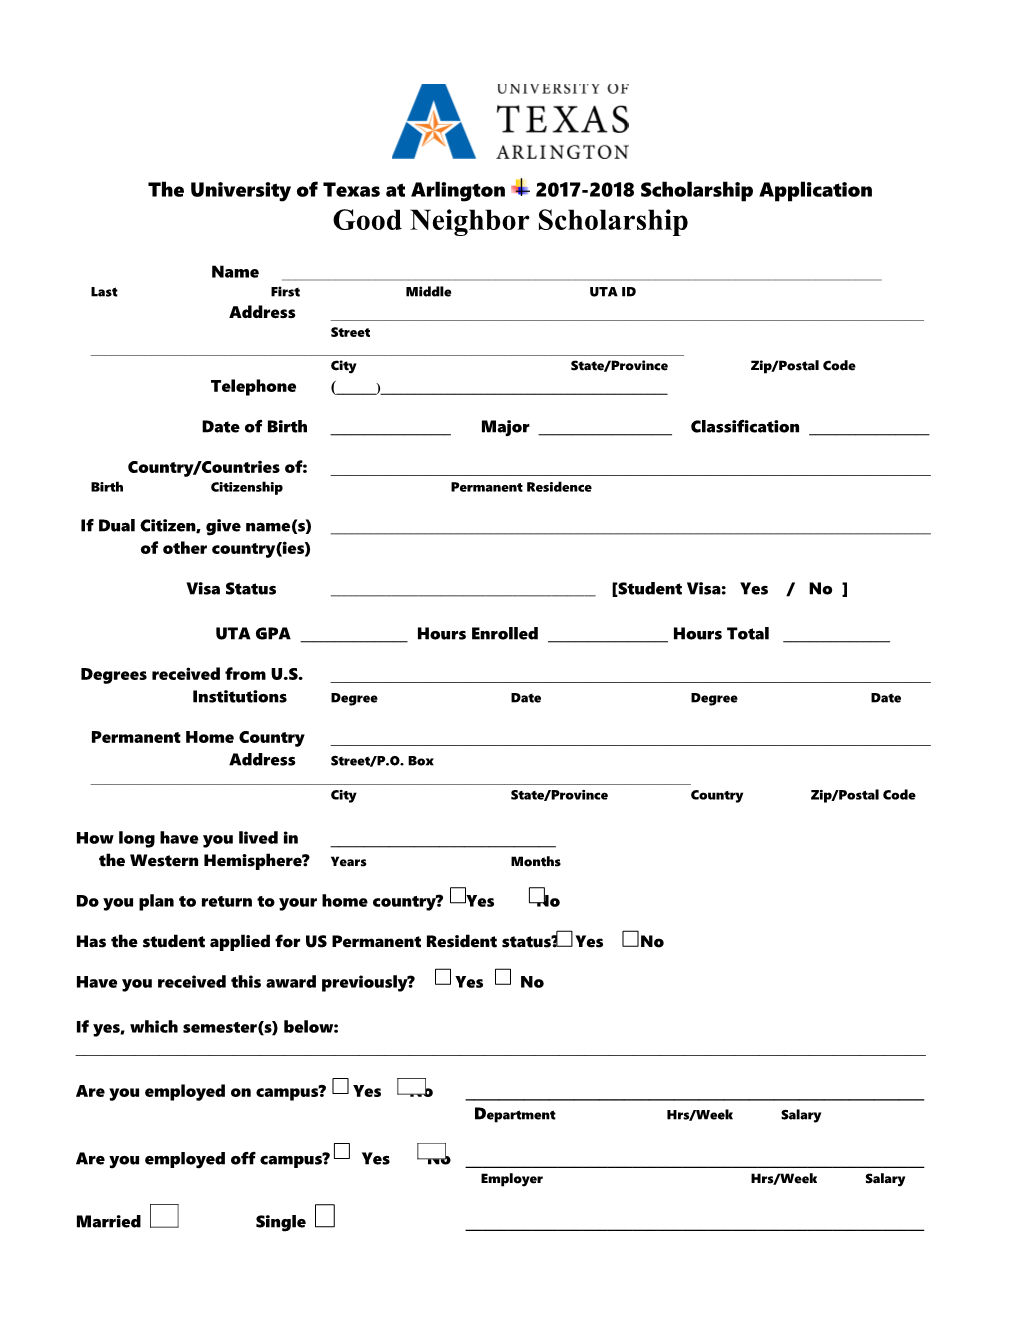 Good Neighbor Scholarship Application Page